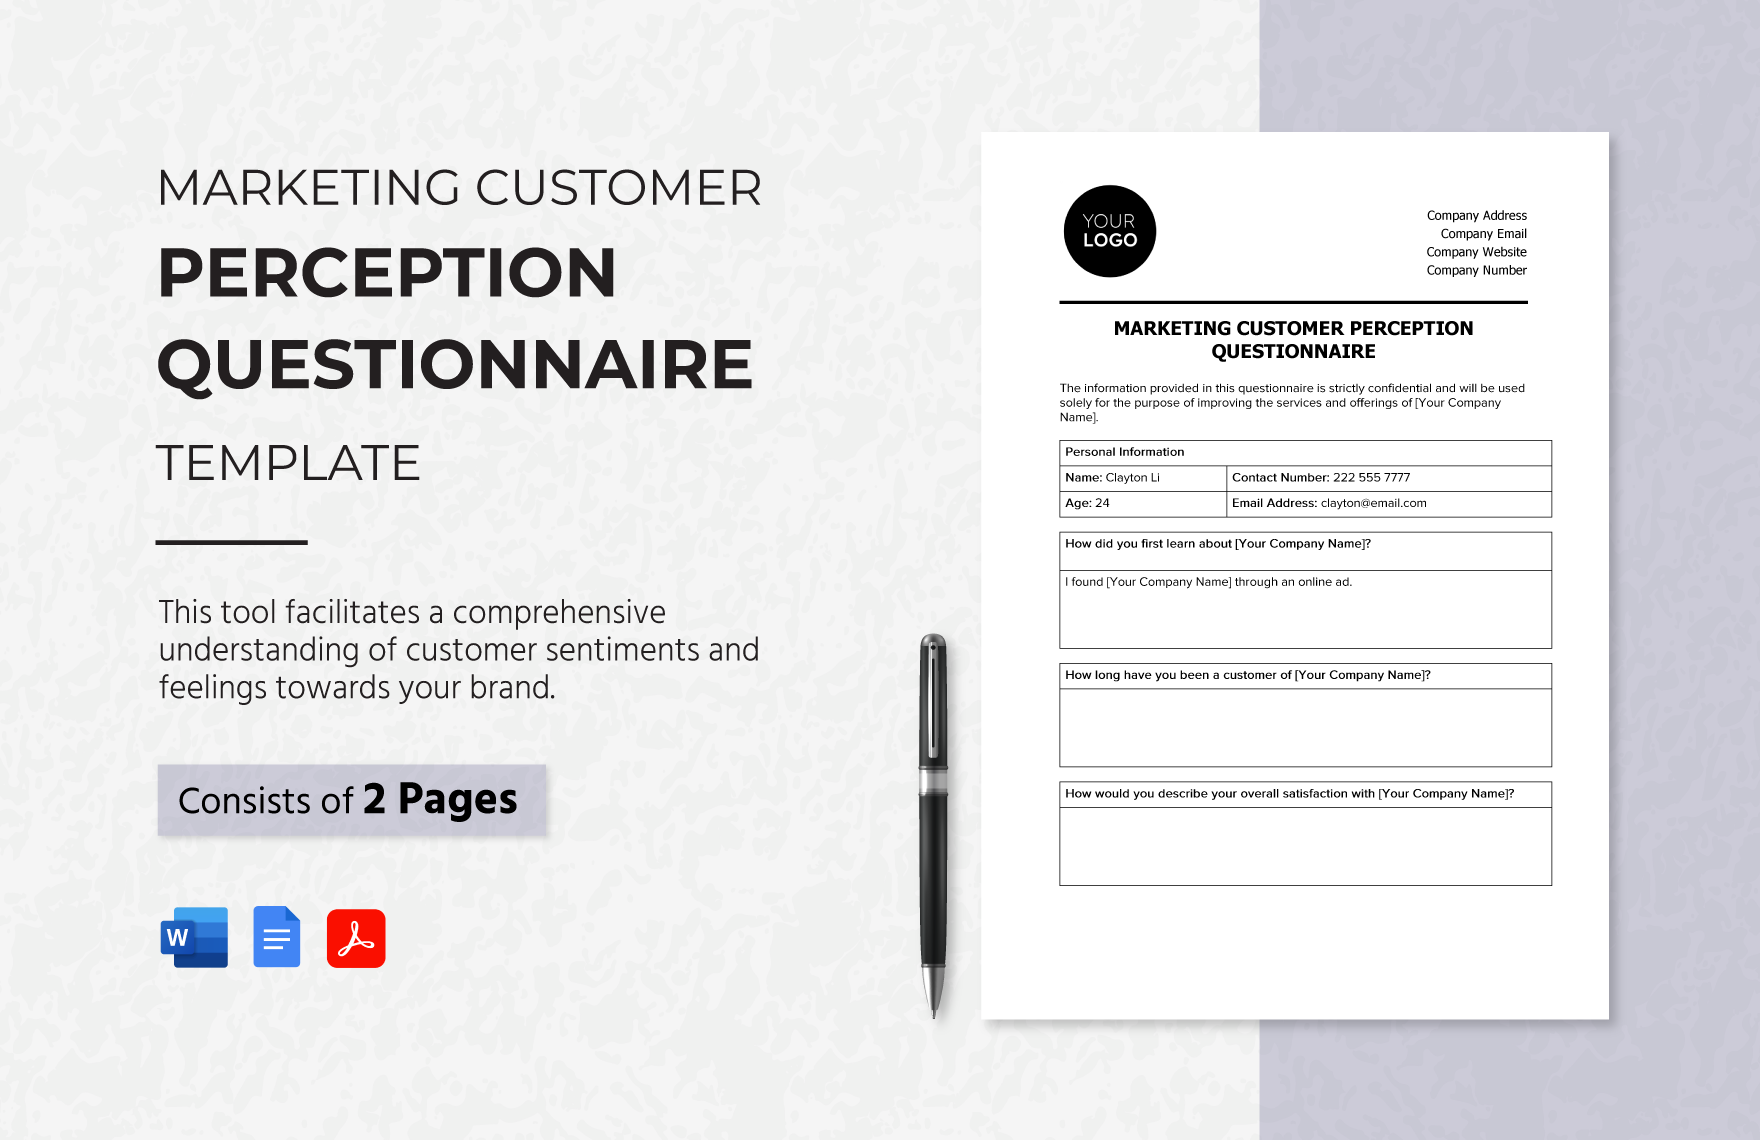 Marketing Customer Perception Questionnaire Template in Word, Google Docs, PDF